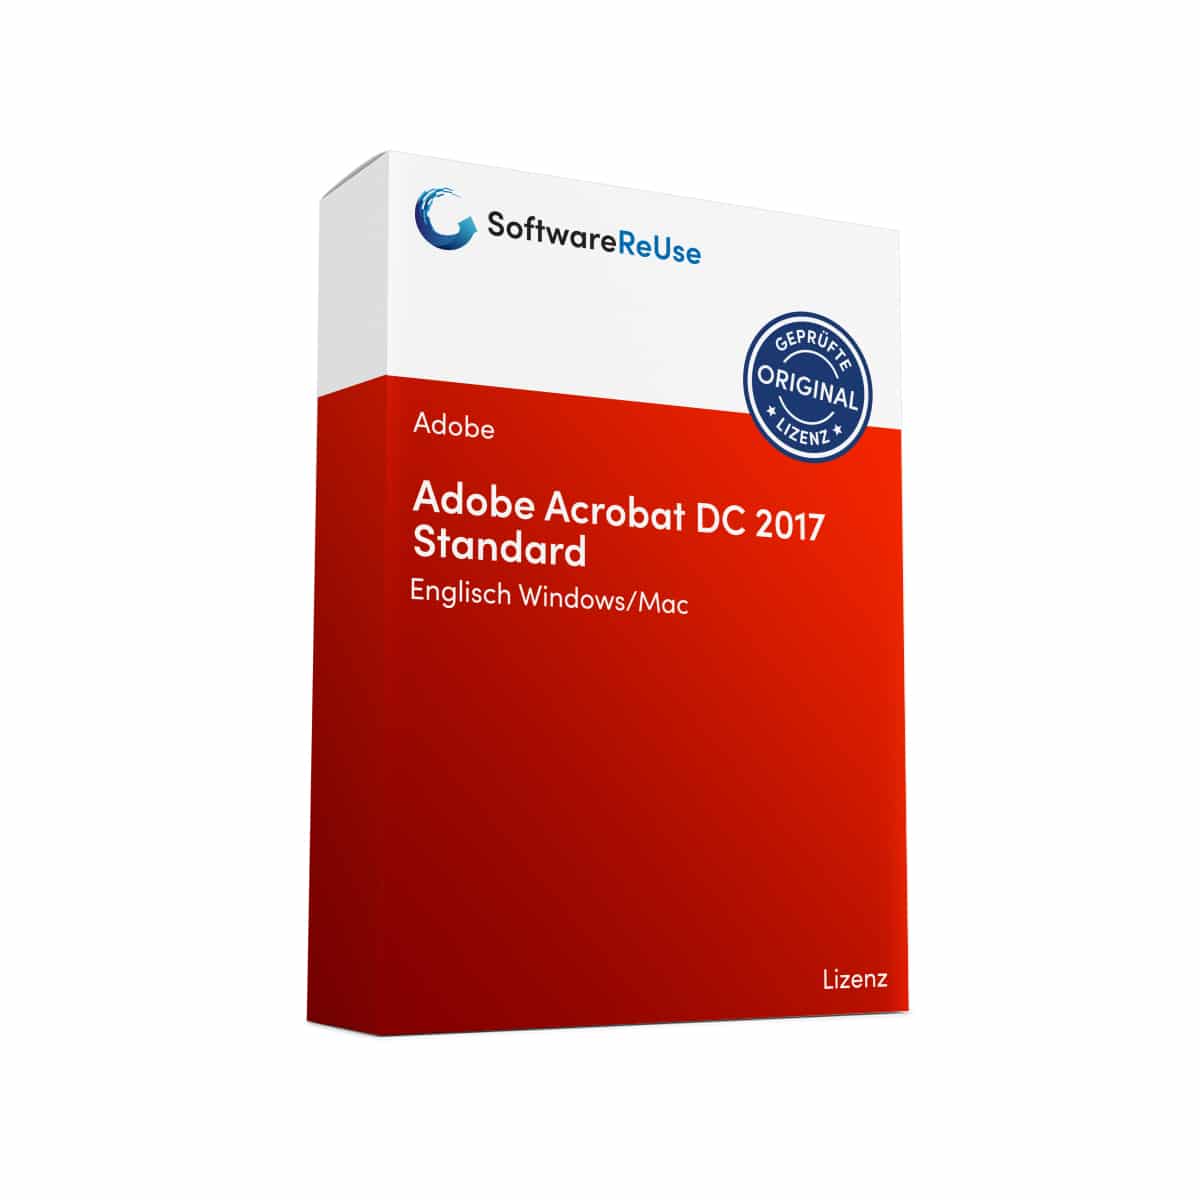 Adobe Acrobat DC 2017 Standard